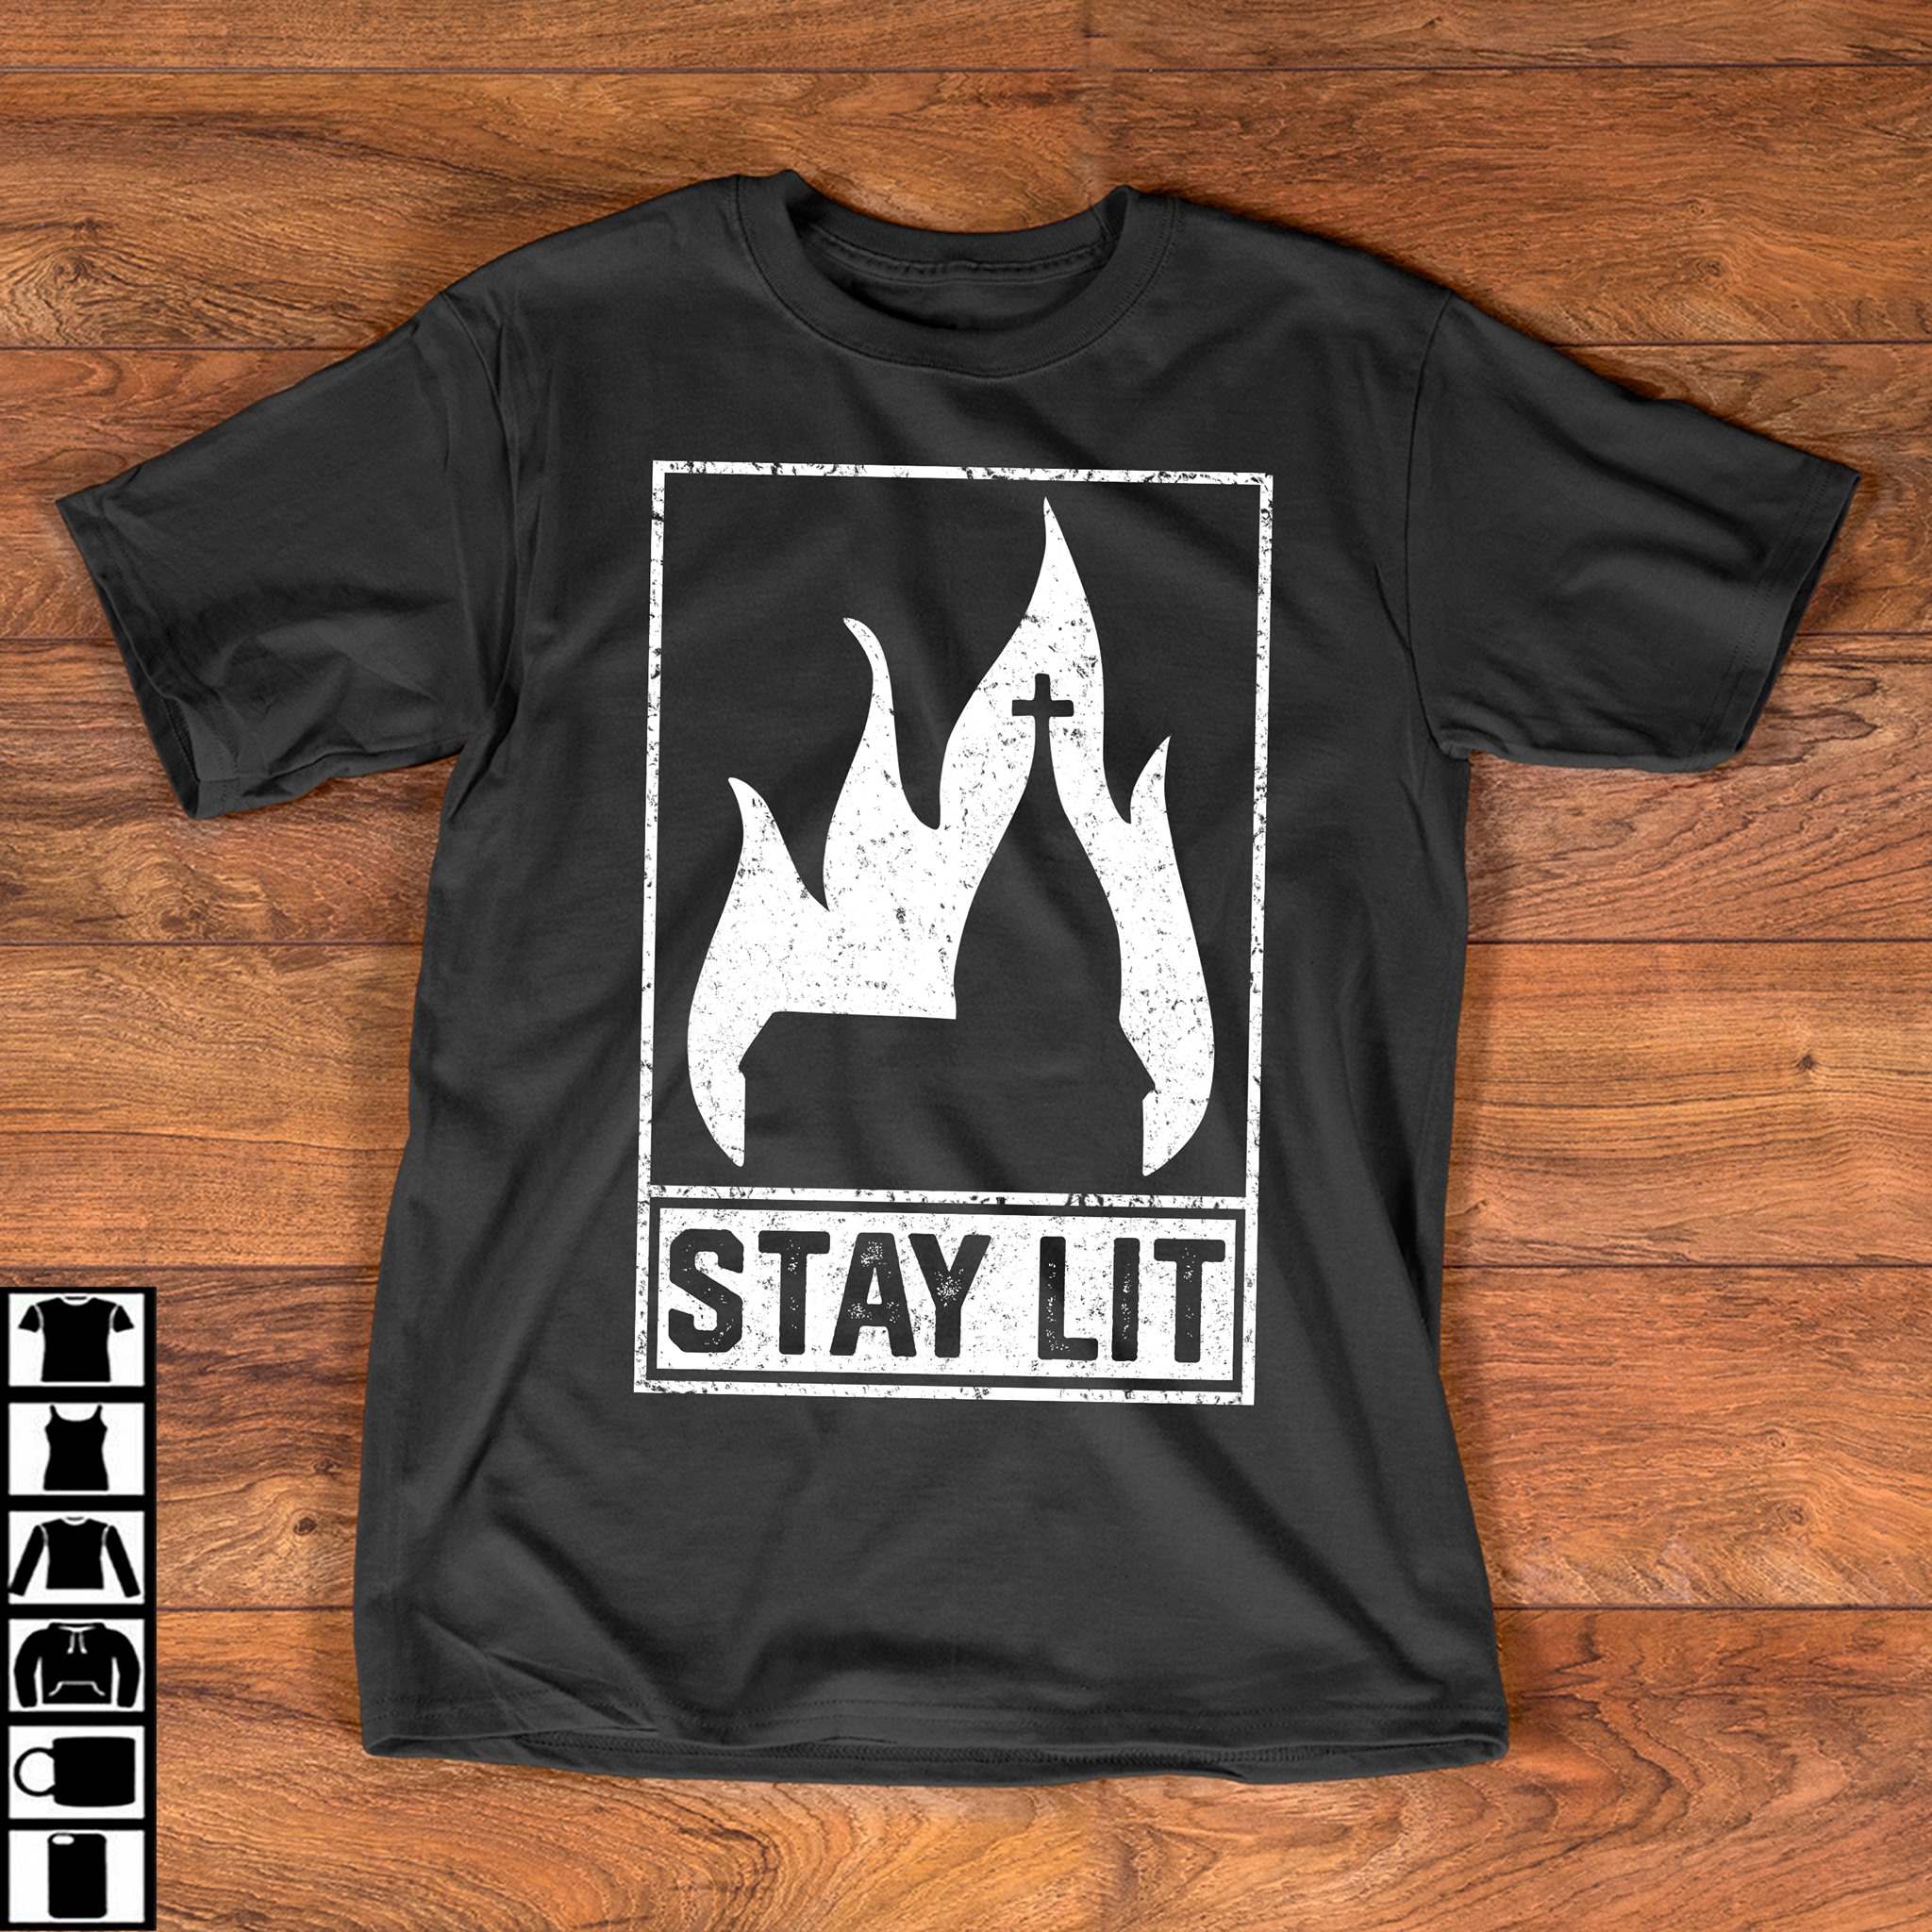 Stay lit Flame church, god church Shirt, Hoodie, Sweatshirt FridayStuff